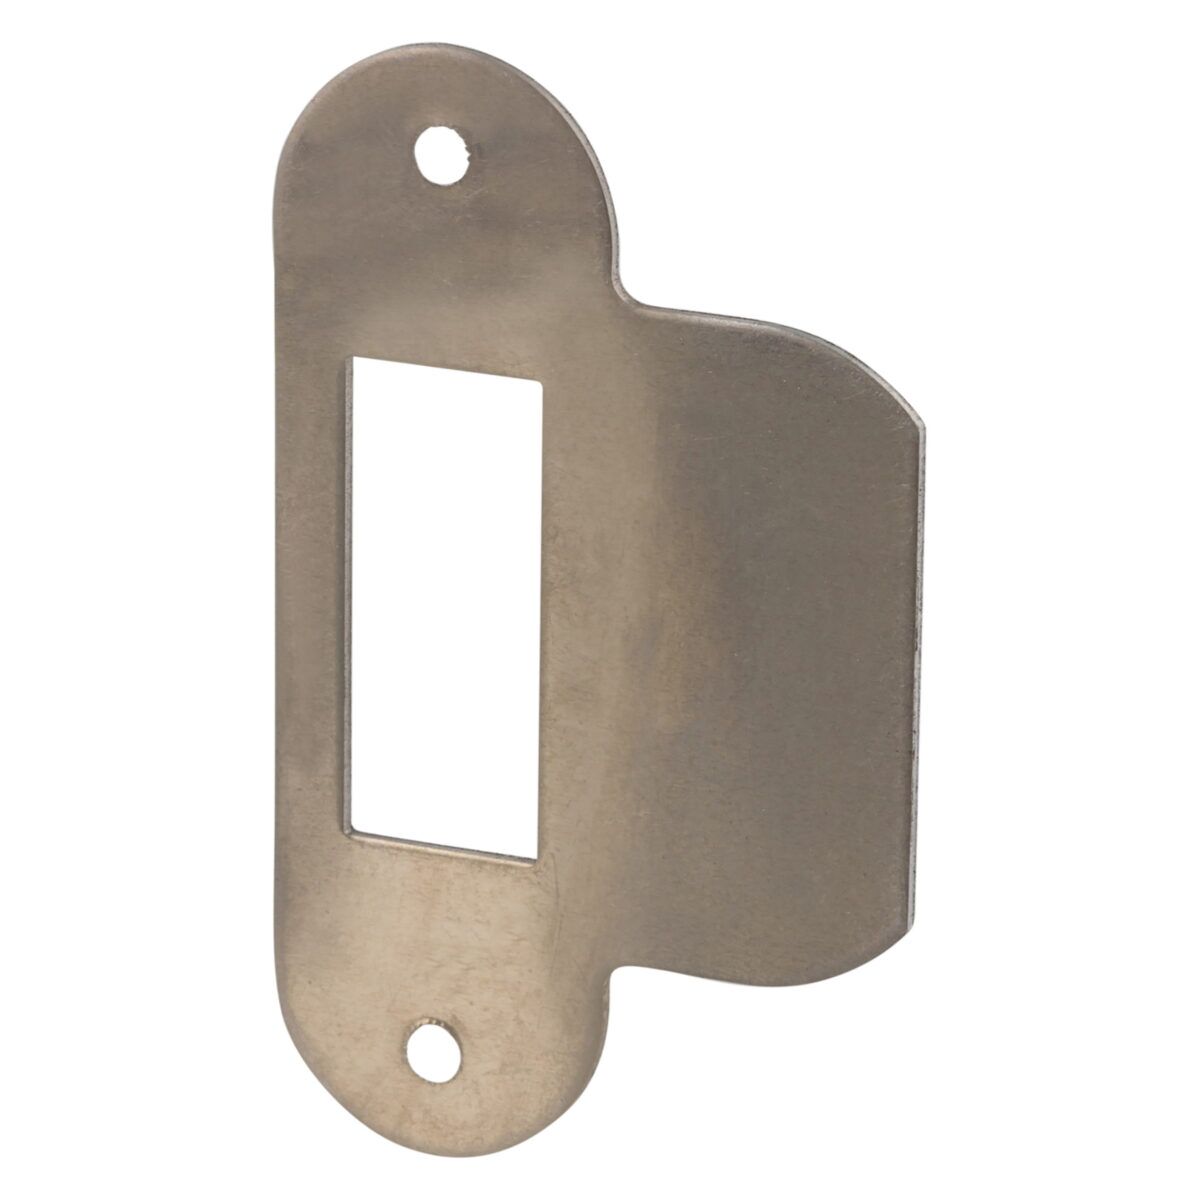 Nemef strike plate for barrel lock - blunt door - left and right - stainless steel